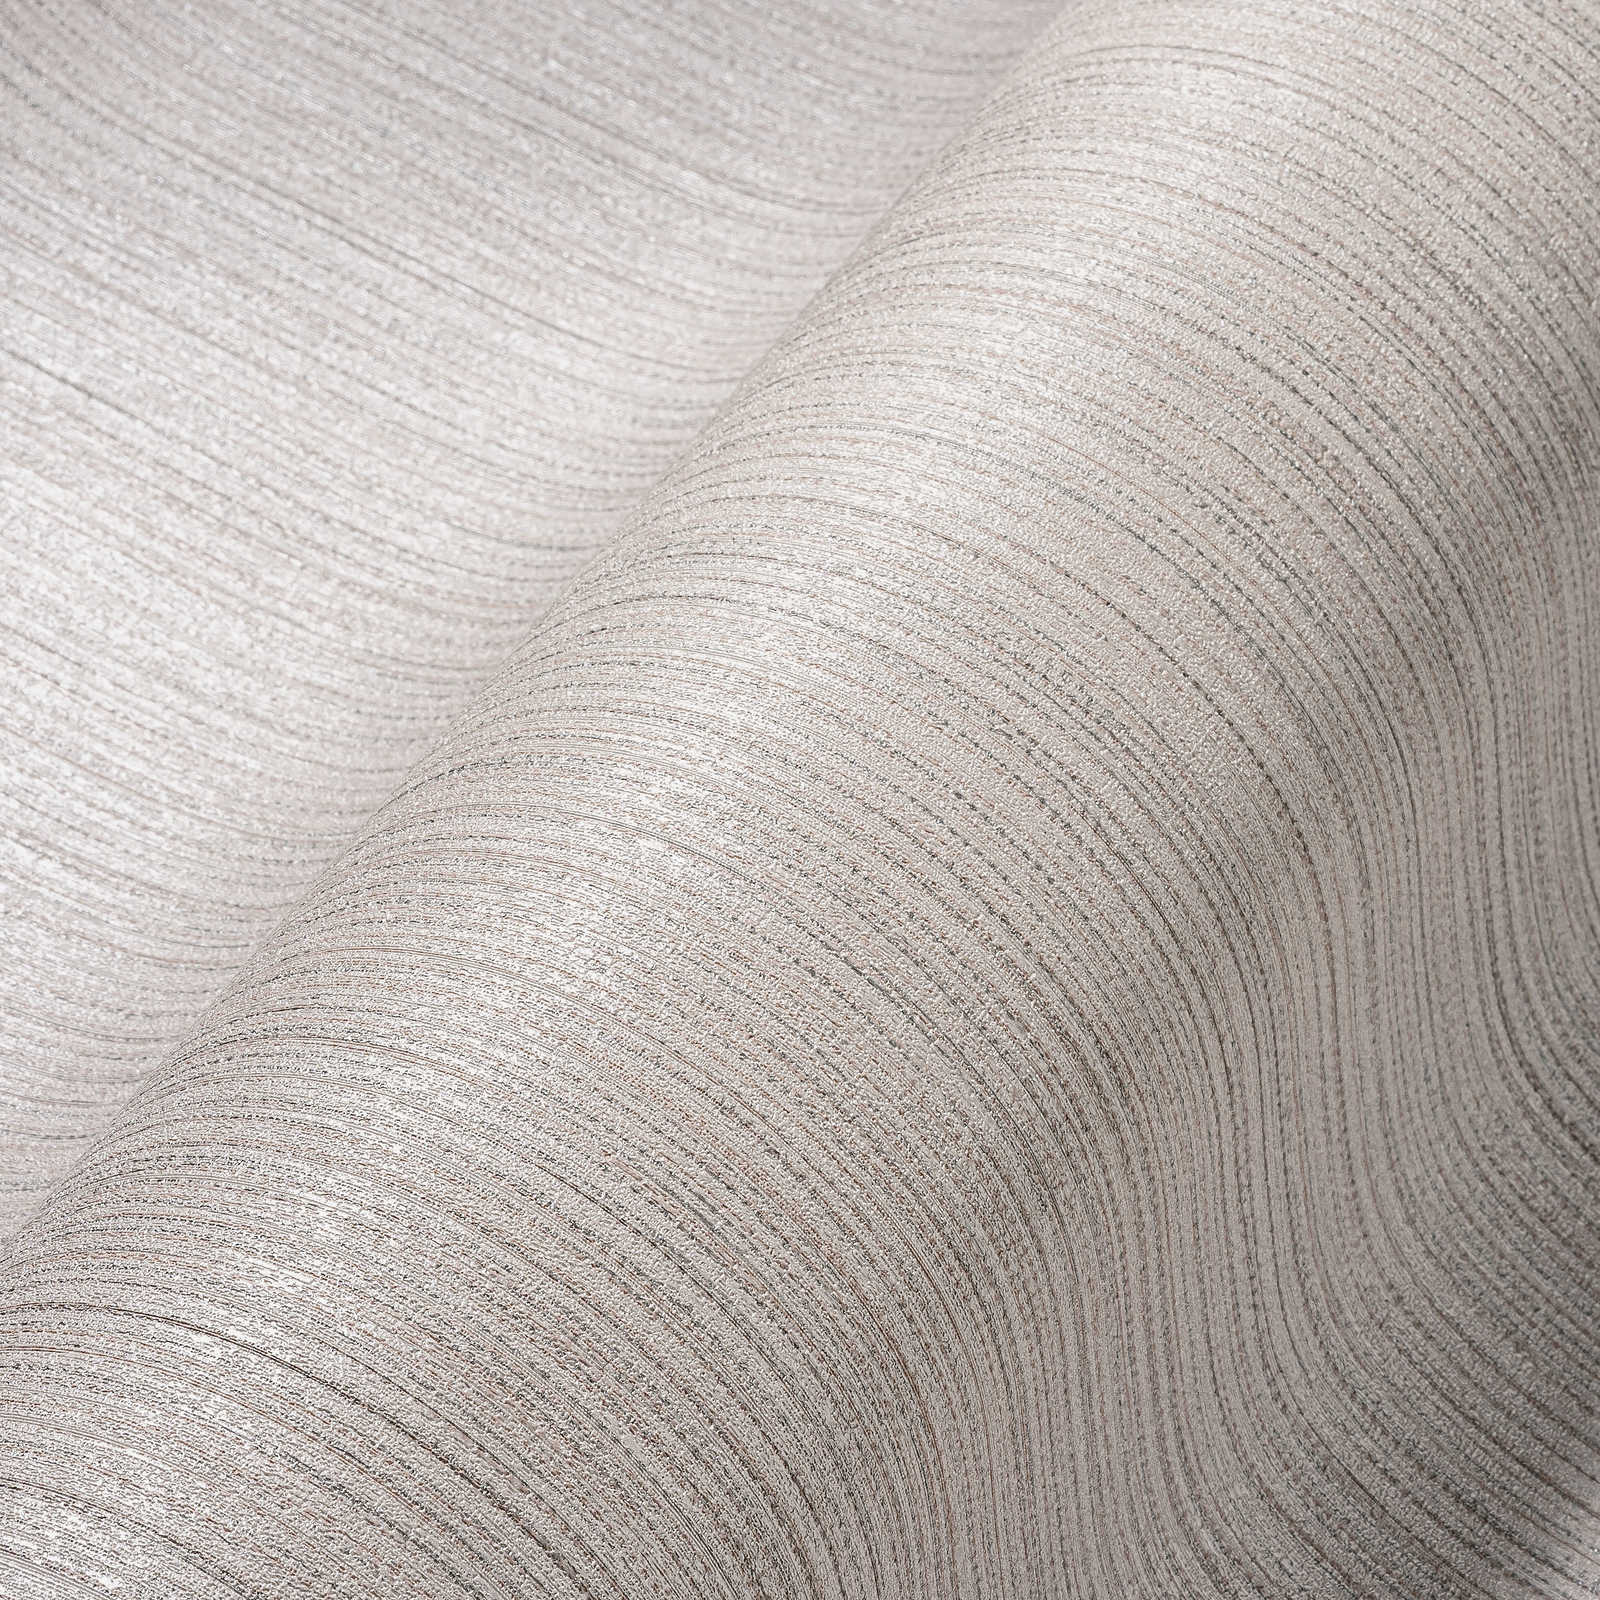             Greige wallpaper metallic luster and line pattern - grey
        